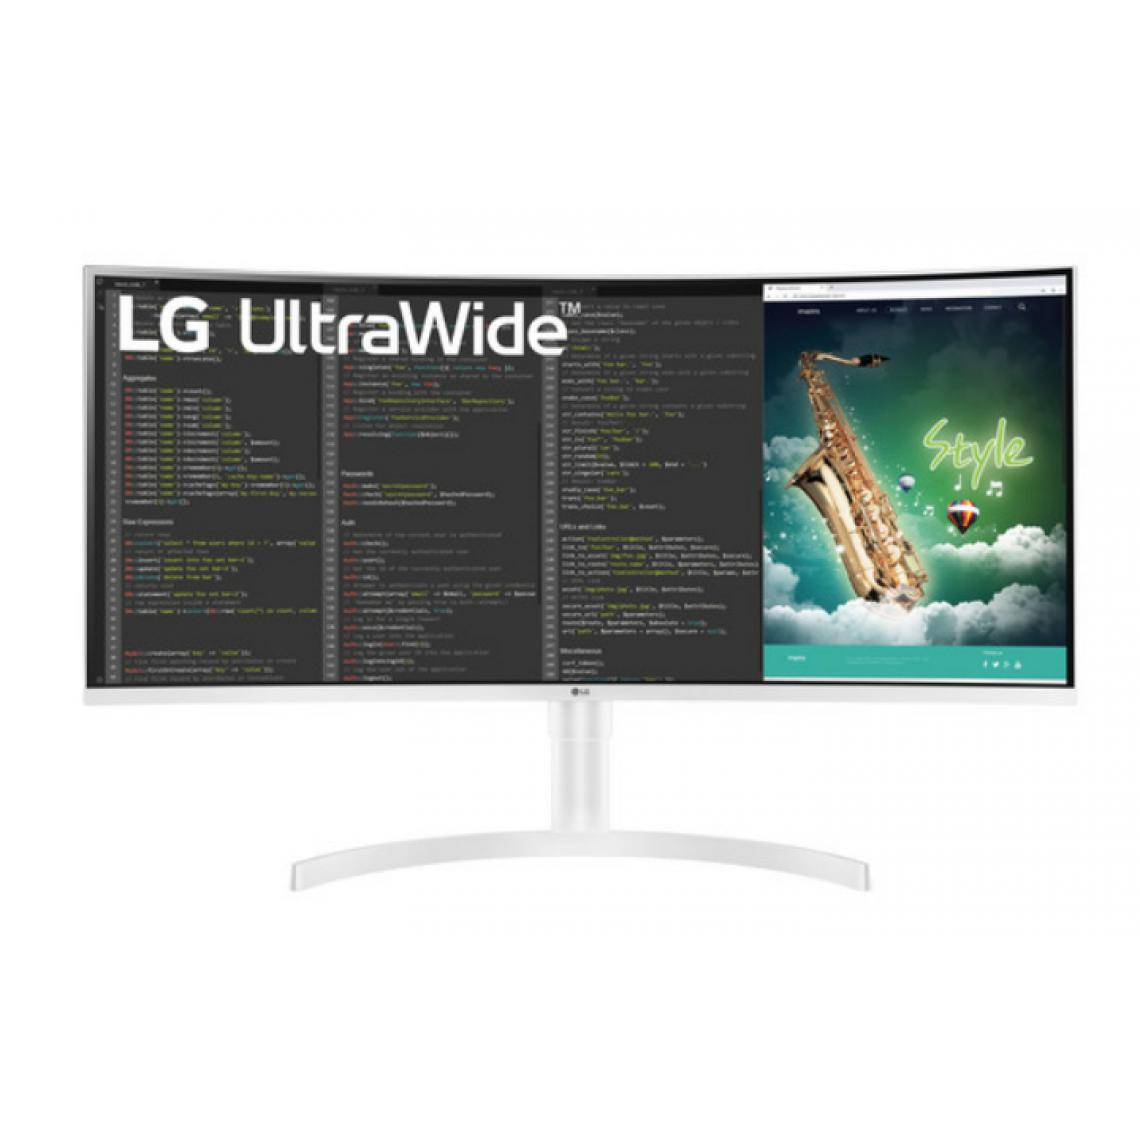 LG - ECRAN 35' incurvé 21:9 5ms UltraWide 3440x1440 300cd/m HDR, 2xHDMI, DisplayP - Moniteur PC